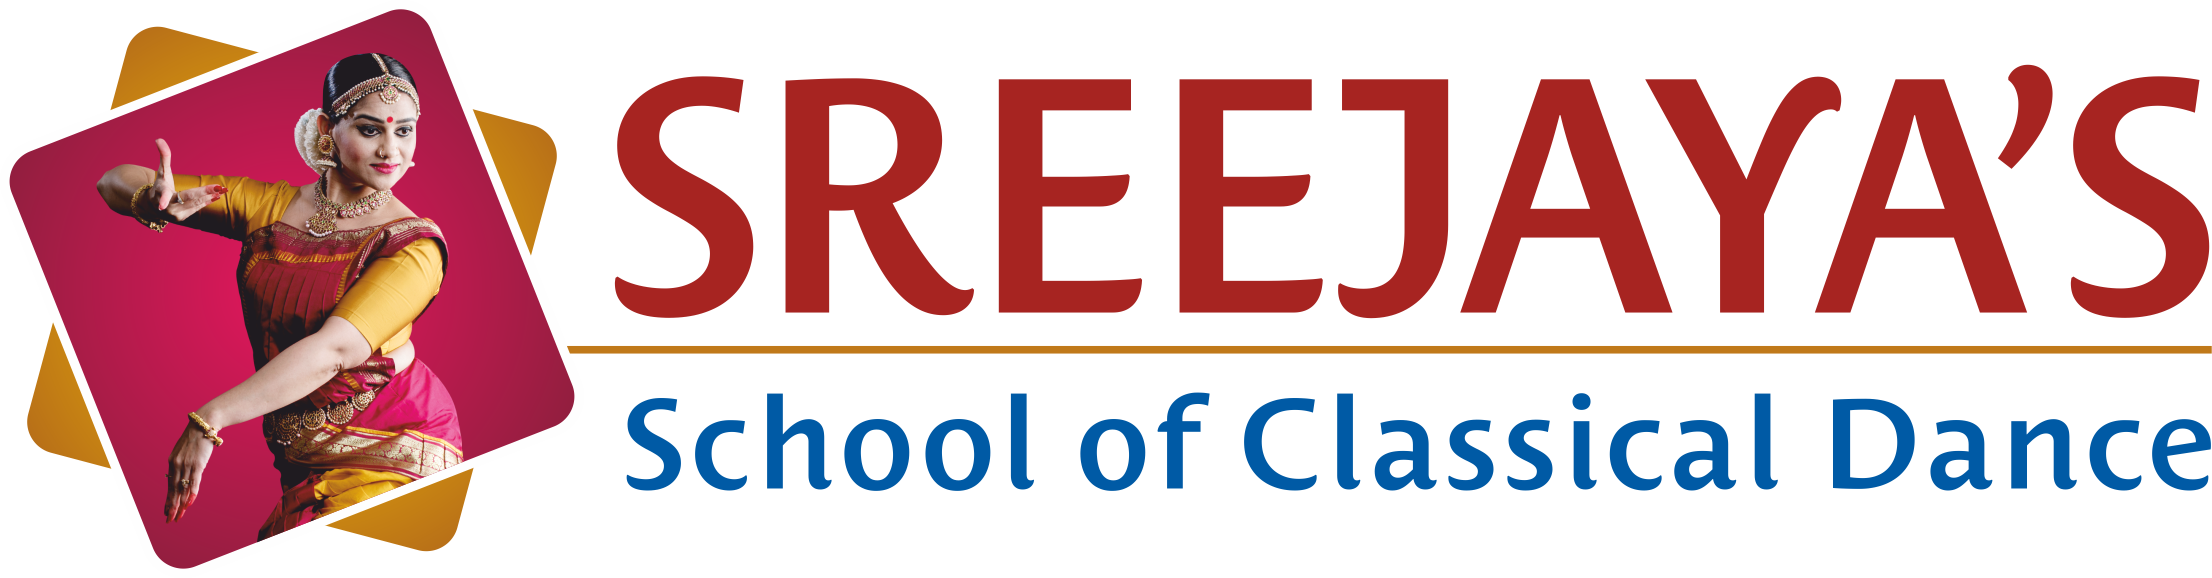 Sreejaya's School Of Classical Dance Logo